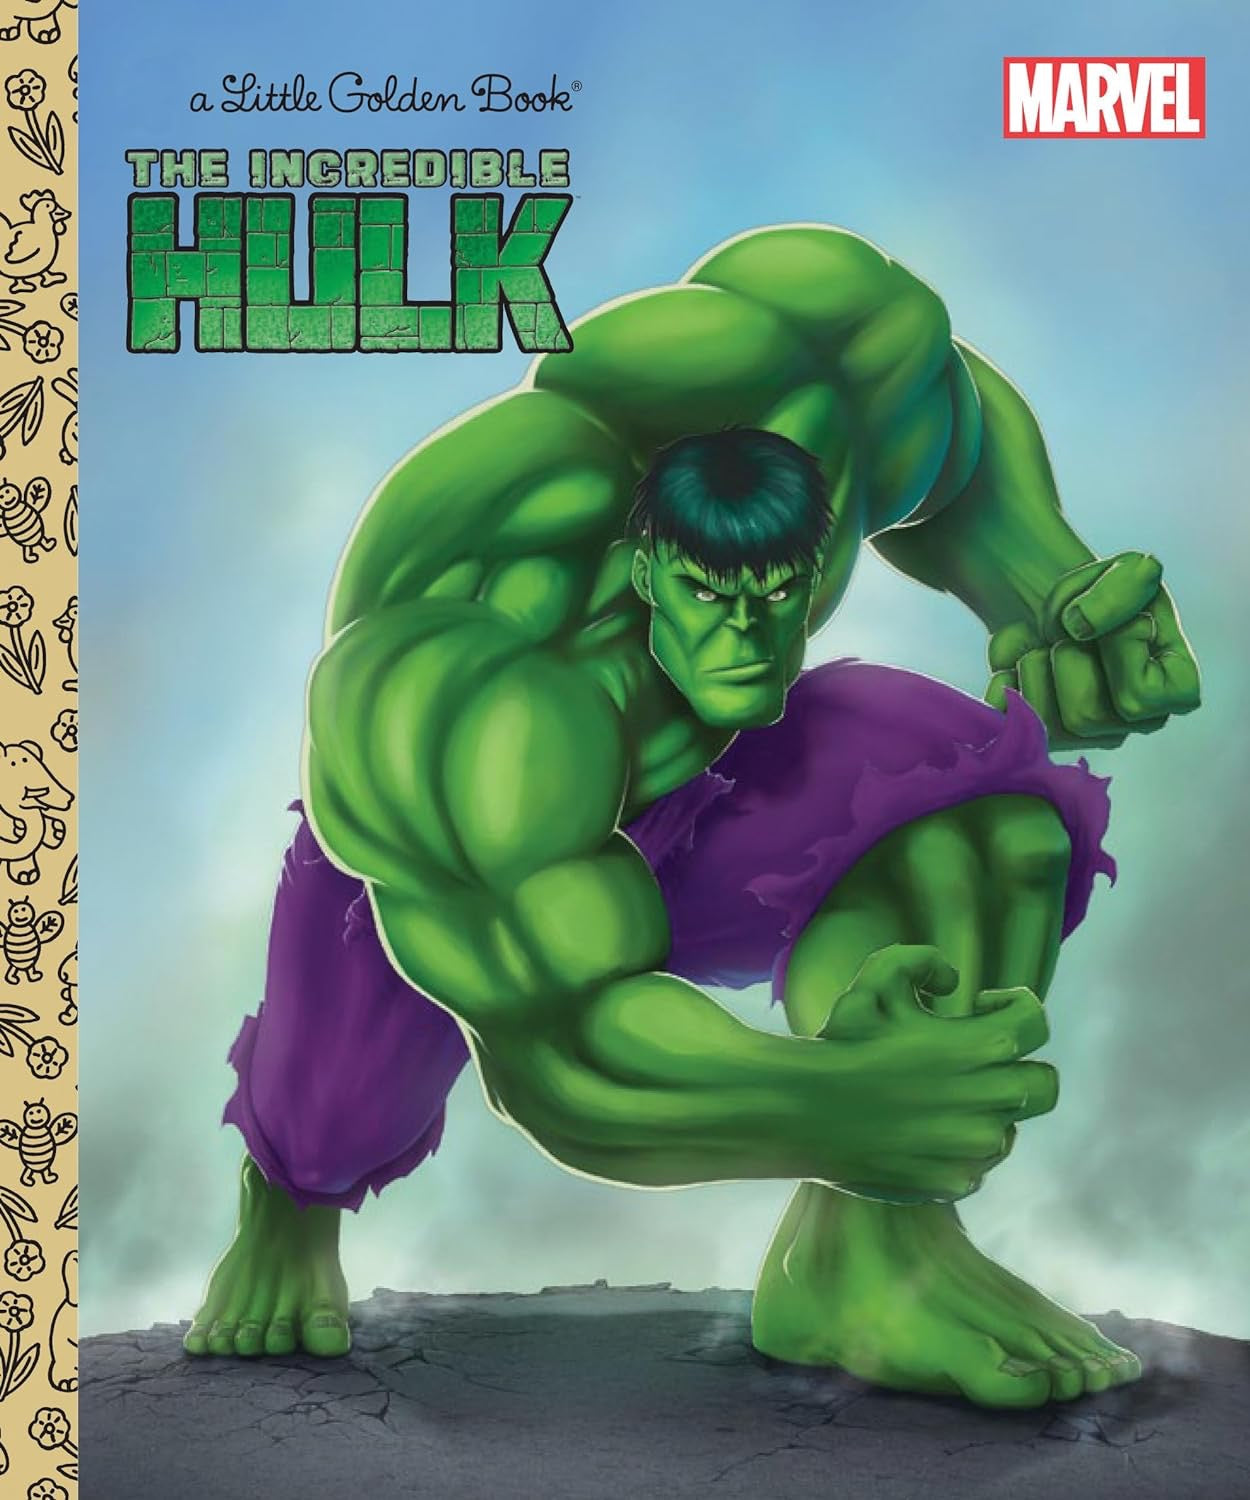 "The Incredible Hulk" Little Golden Book